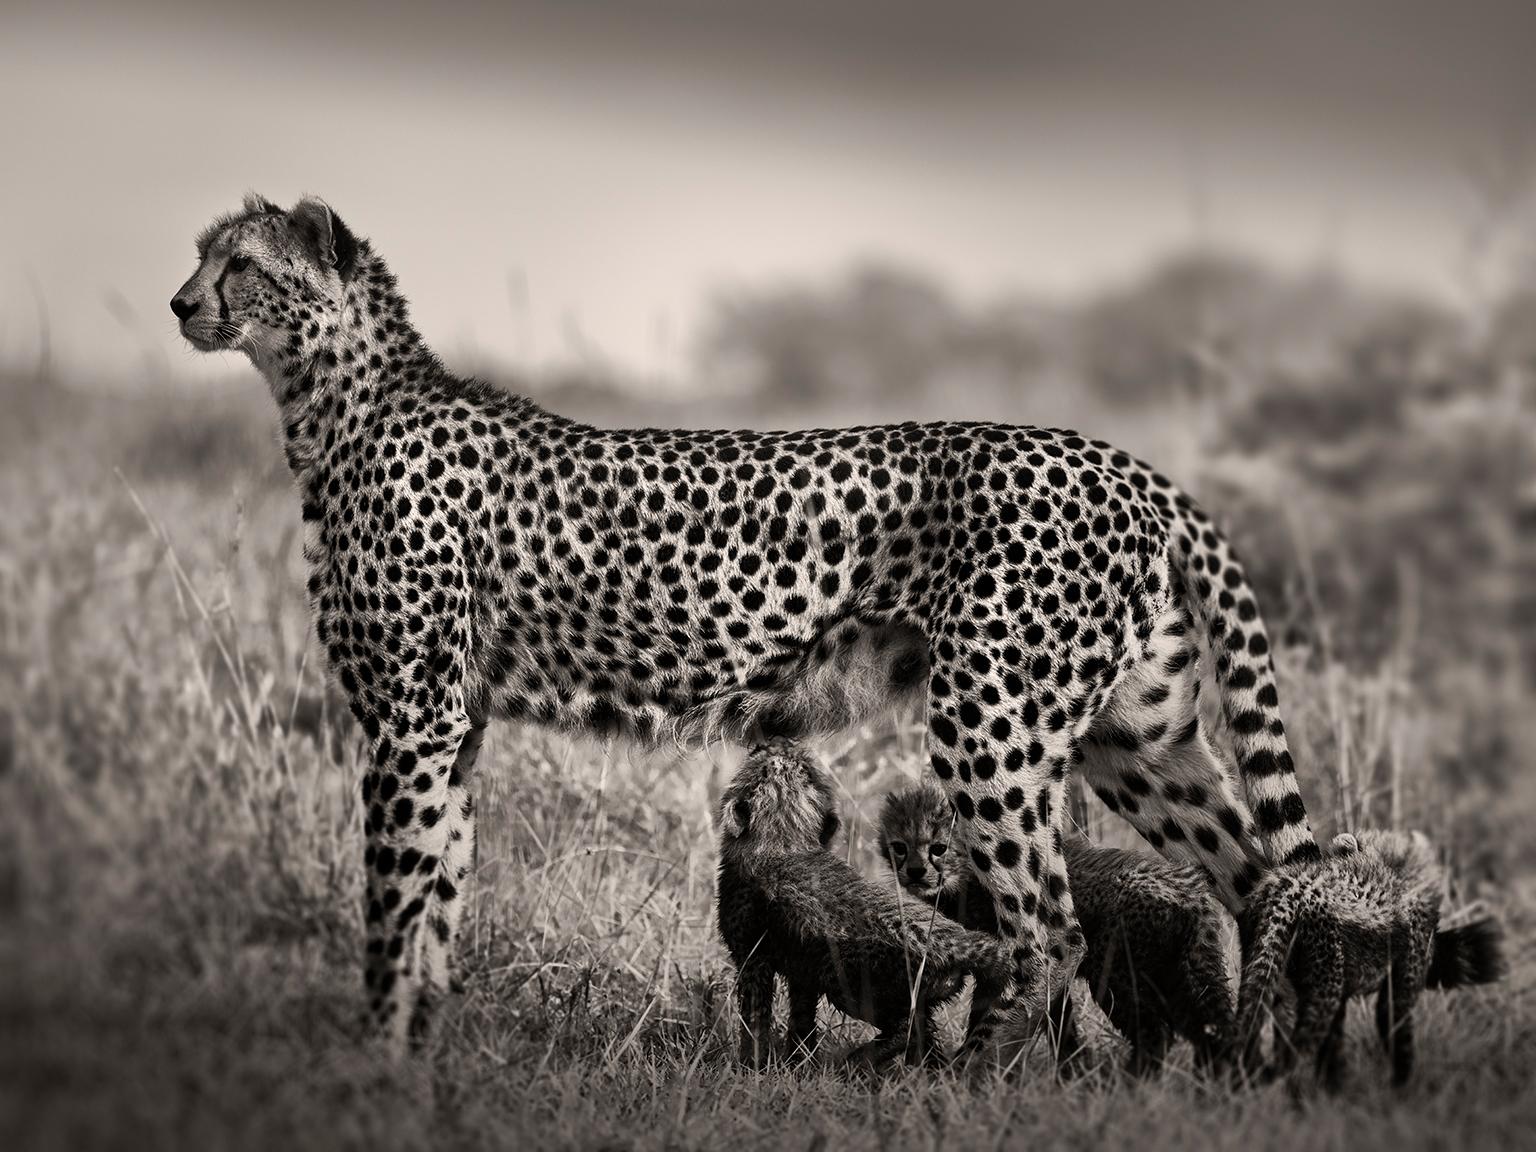 Joachim Schmeisser Black and White Photograph - Cheetah nursing babies, blackandhwite photography, Africa, Portrait, Wildlife